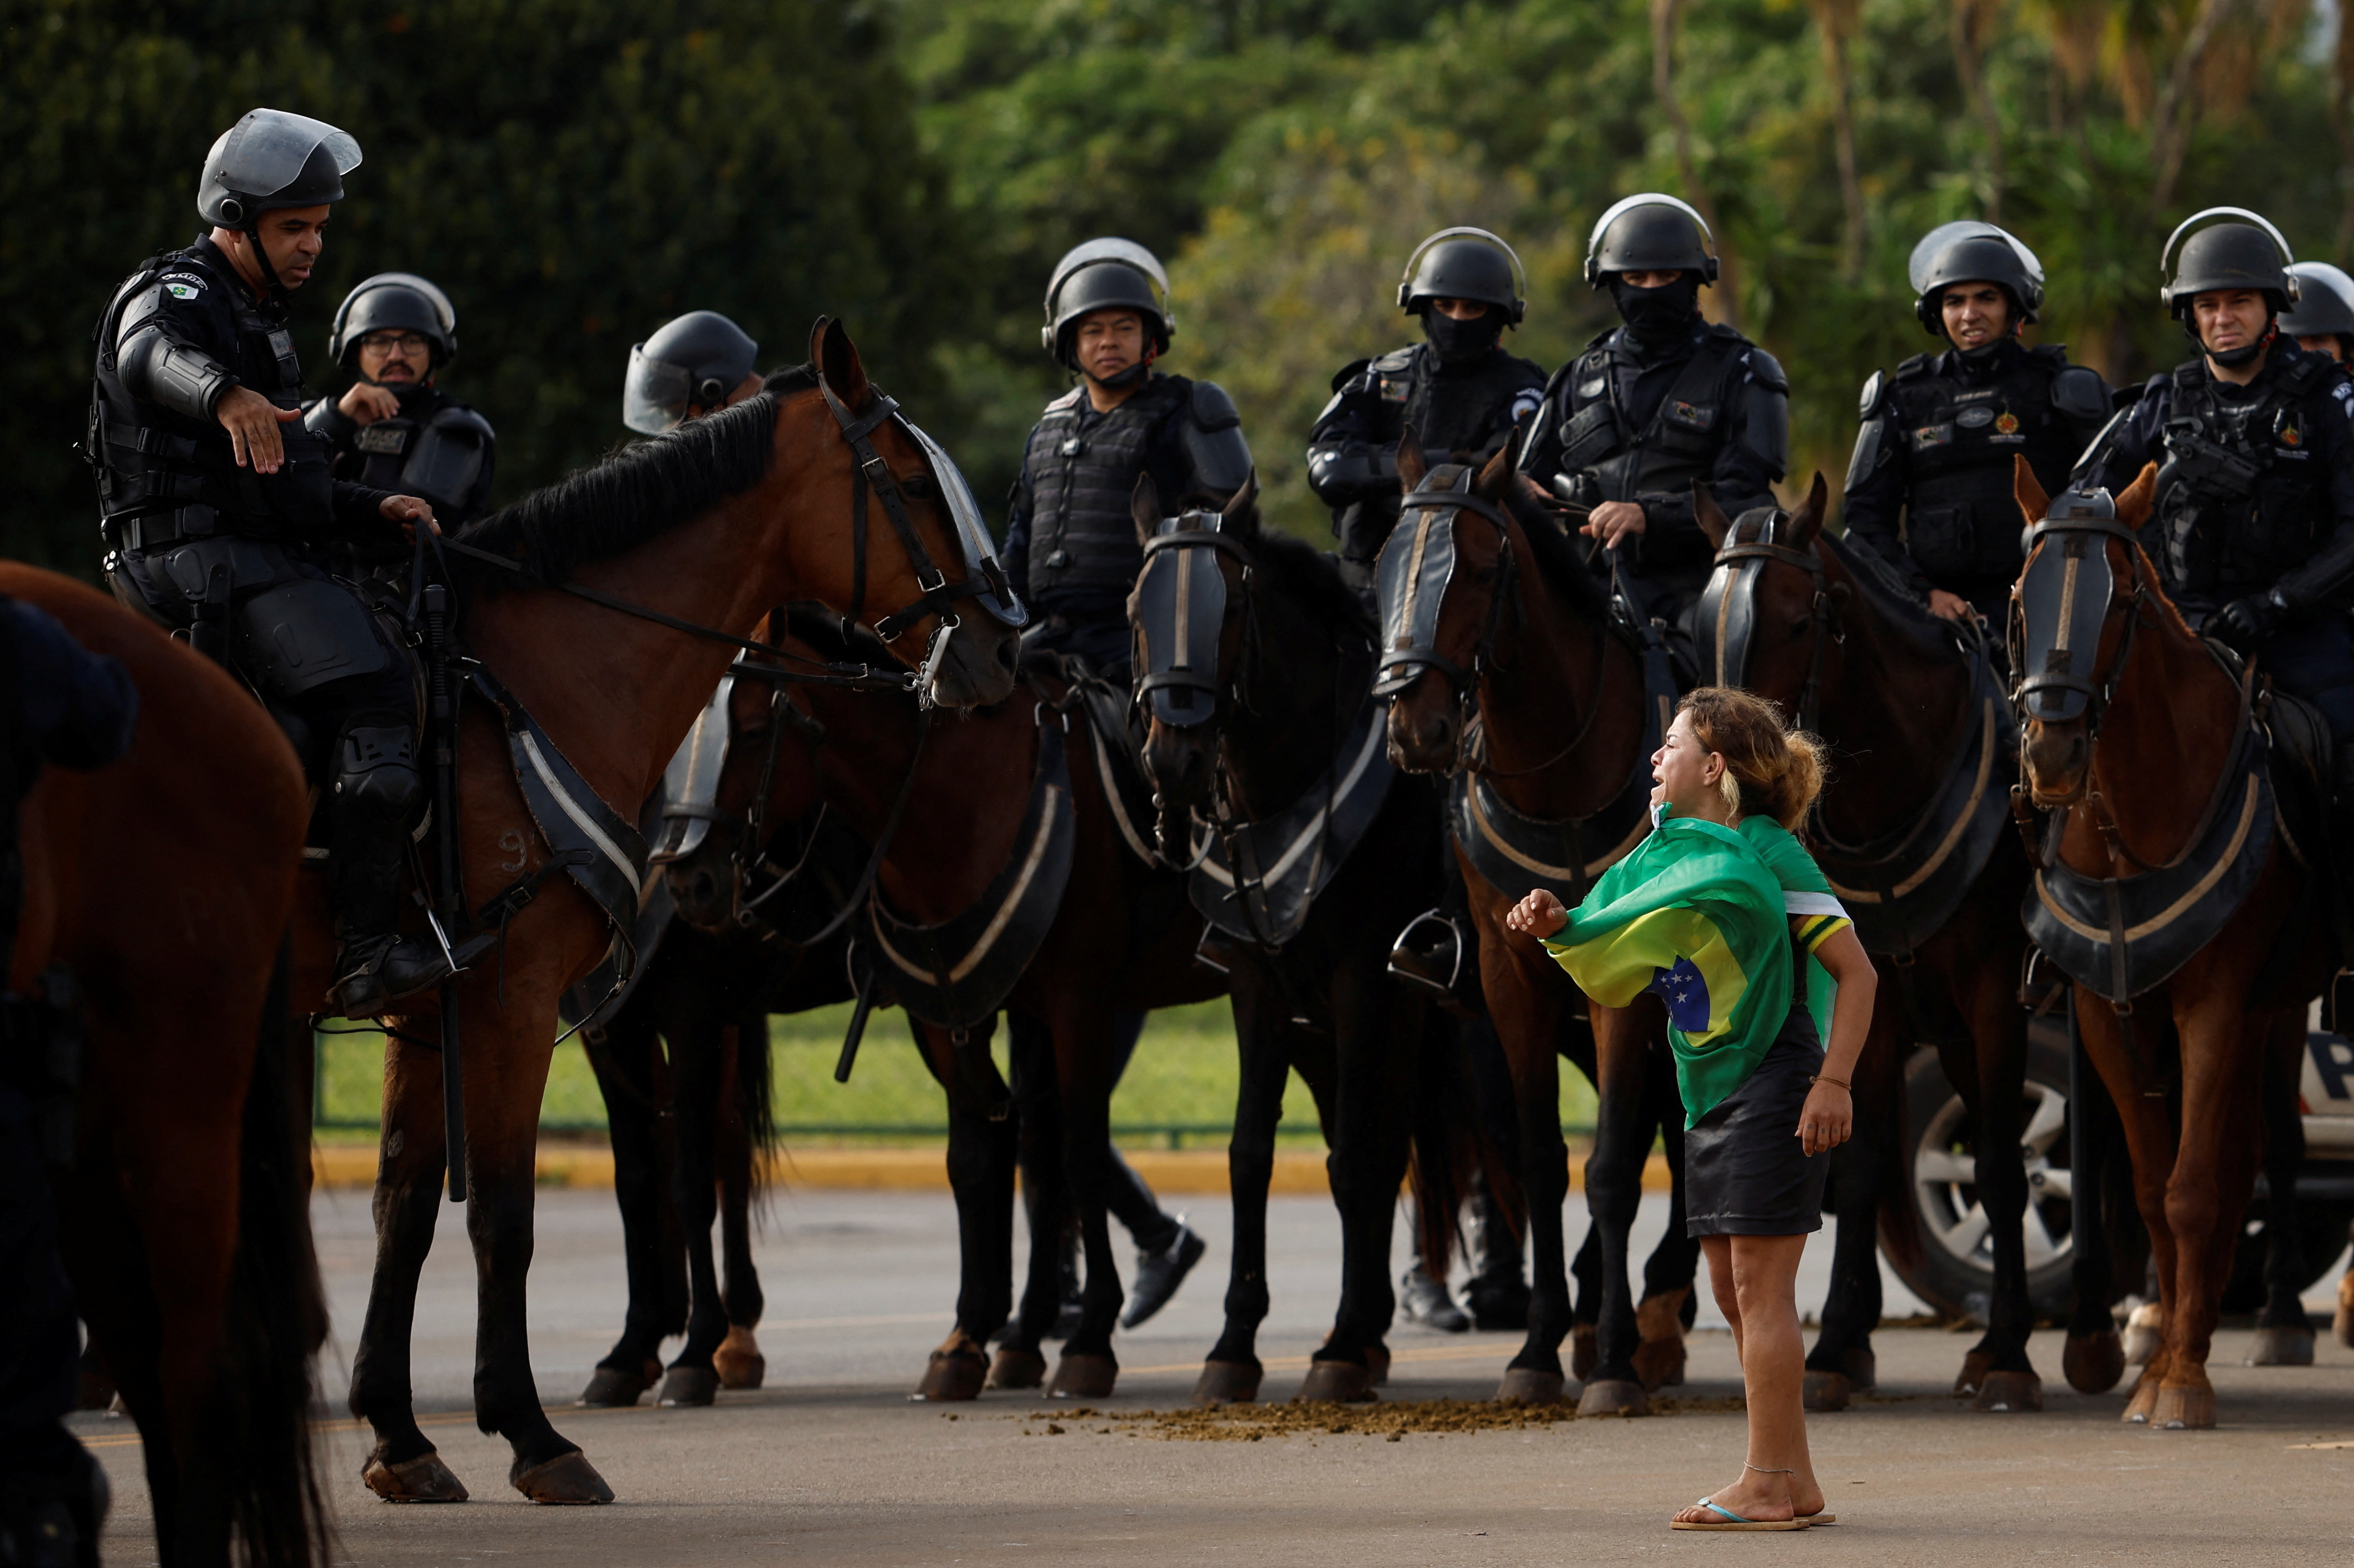 Aftermath of Brazil's anti-democratic riots